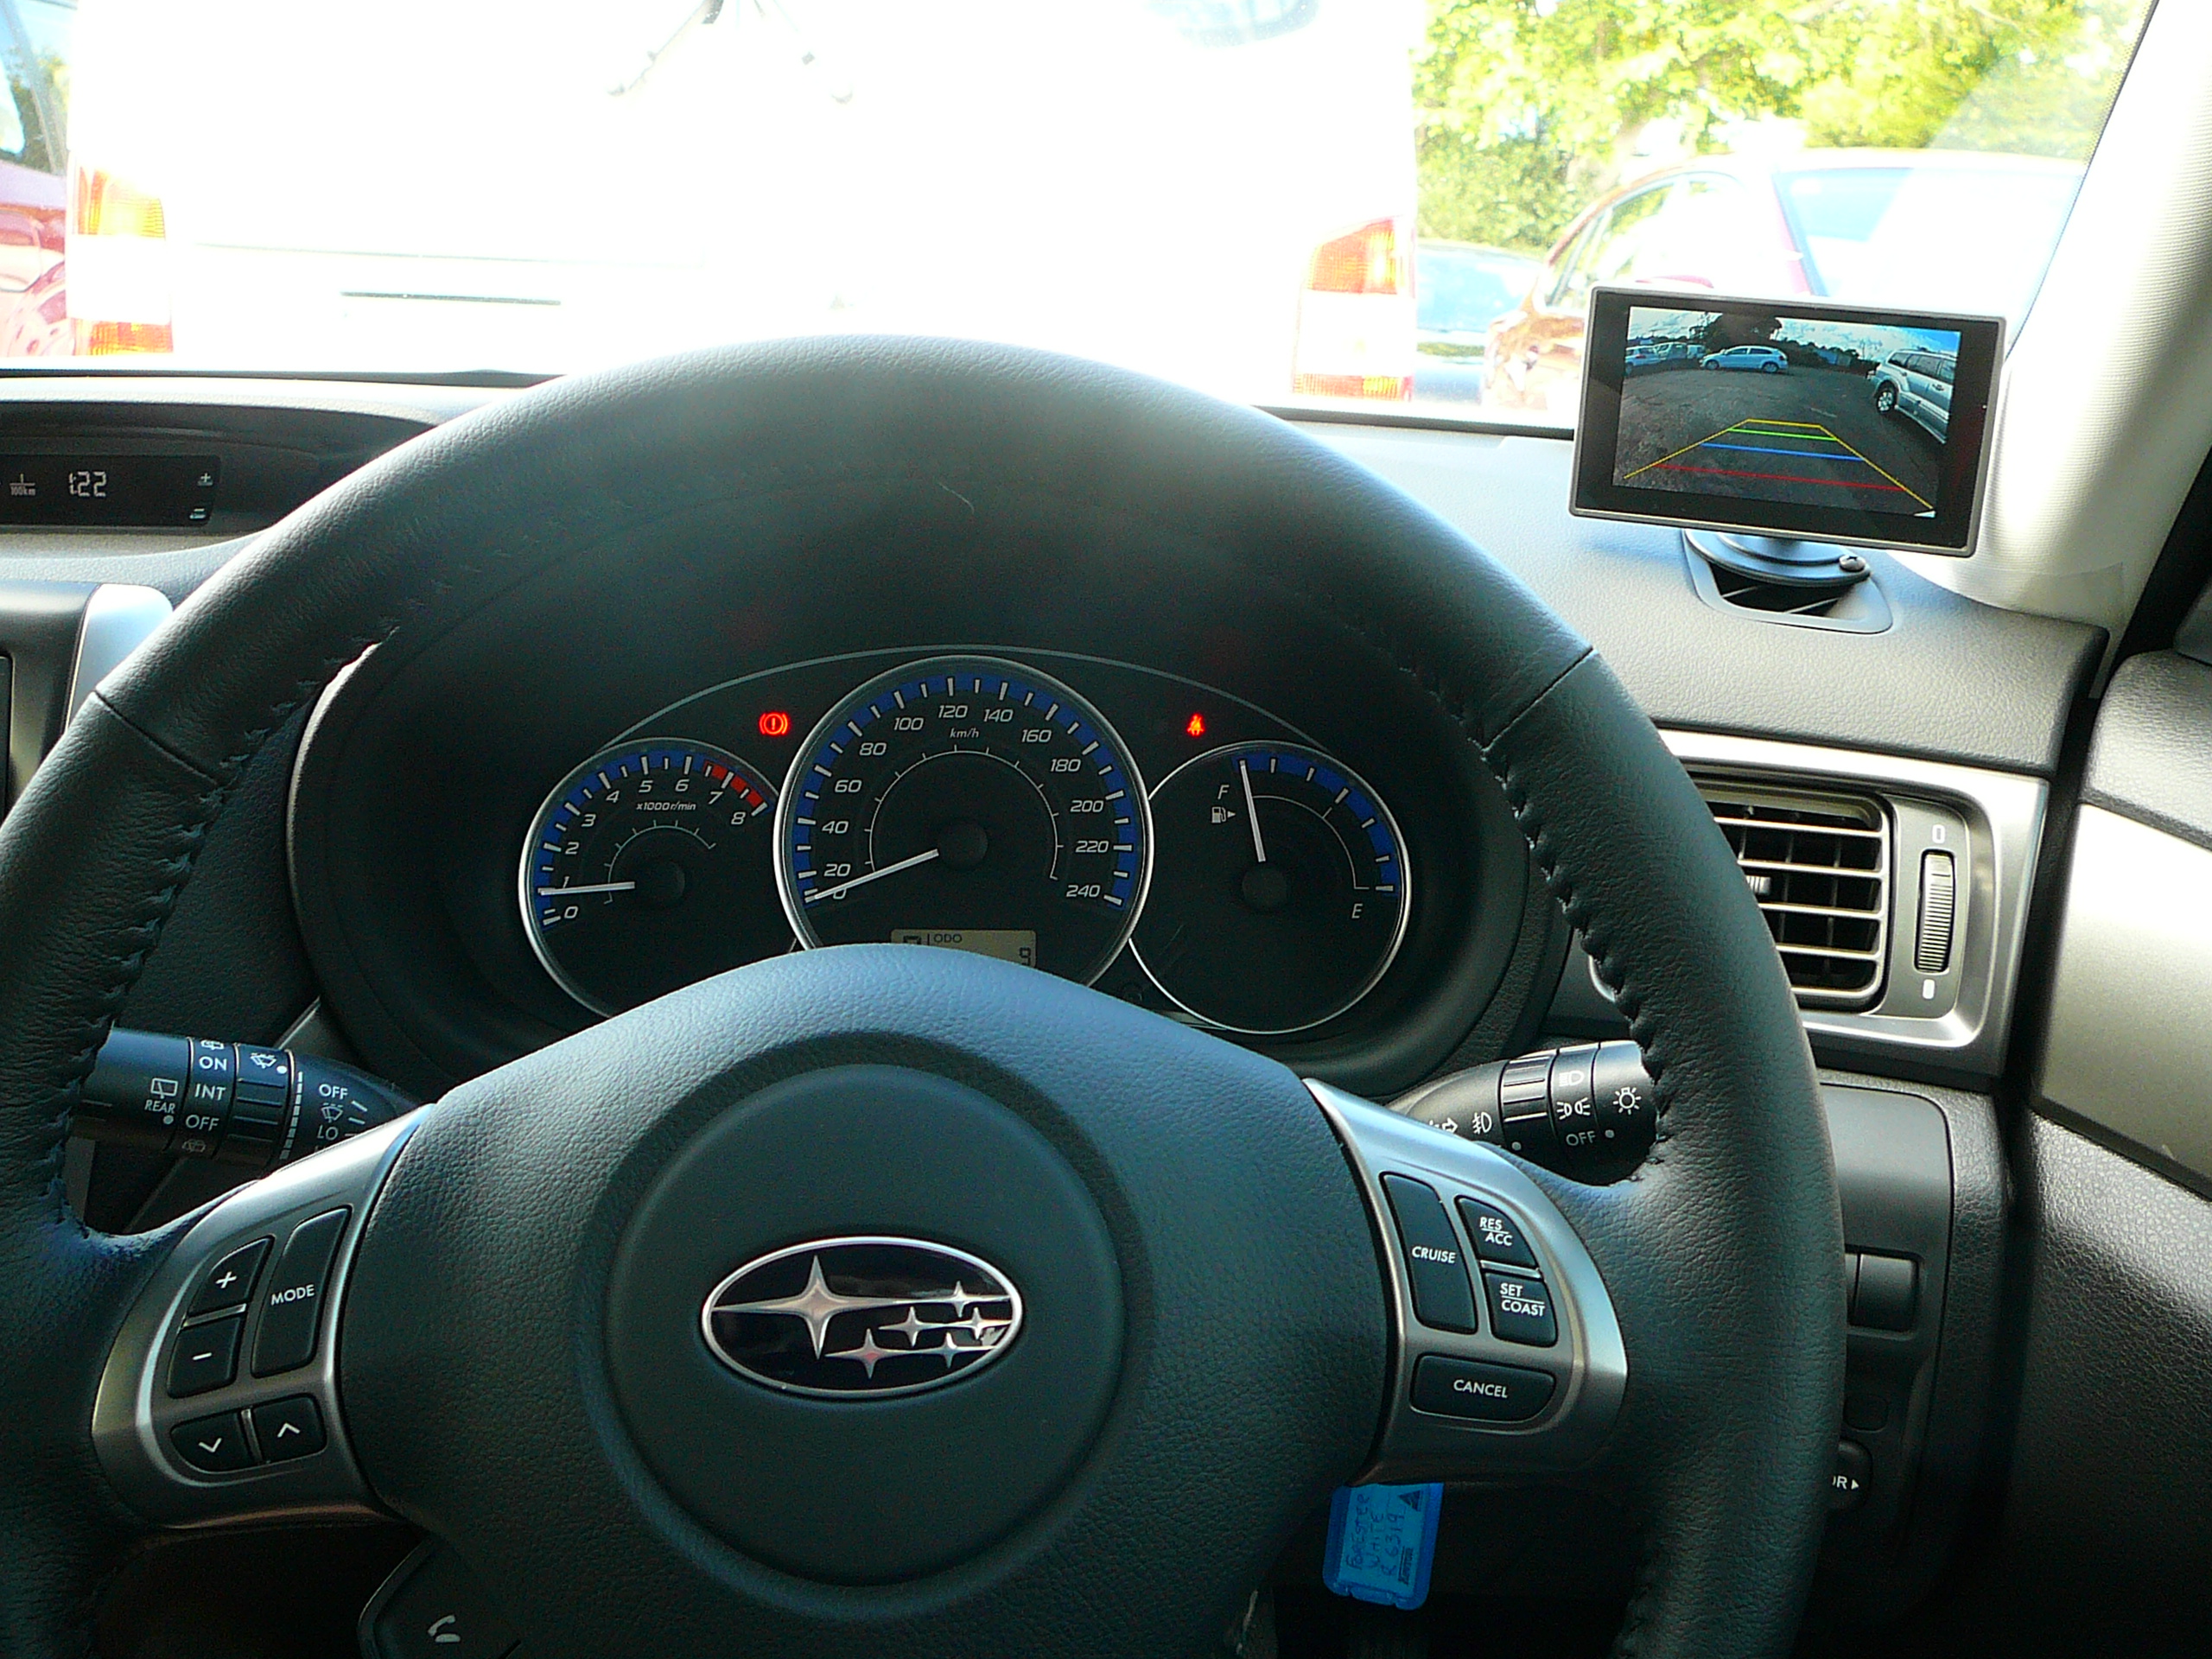 Subaru Forester 2012, 4.3 inch dash mounted monitor and Reverse Camera